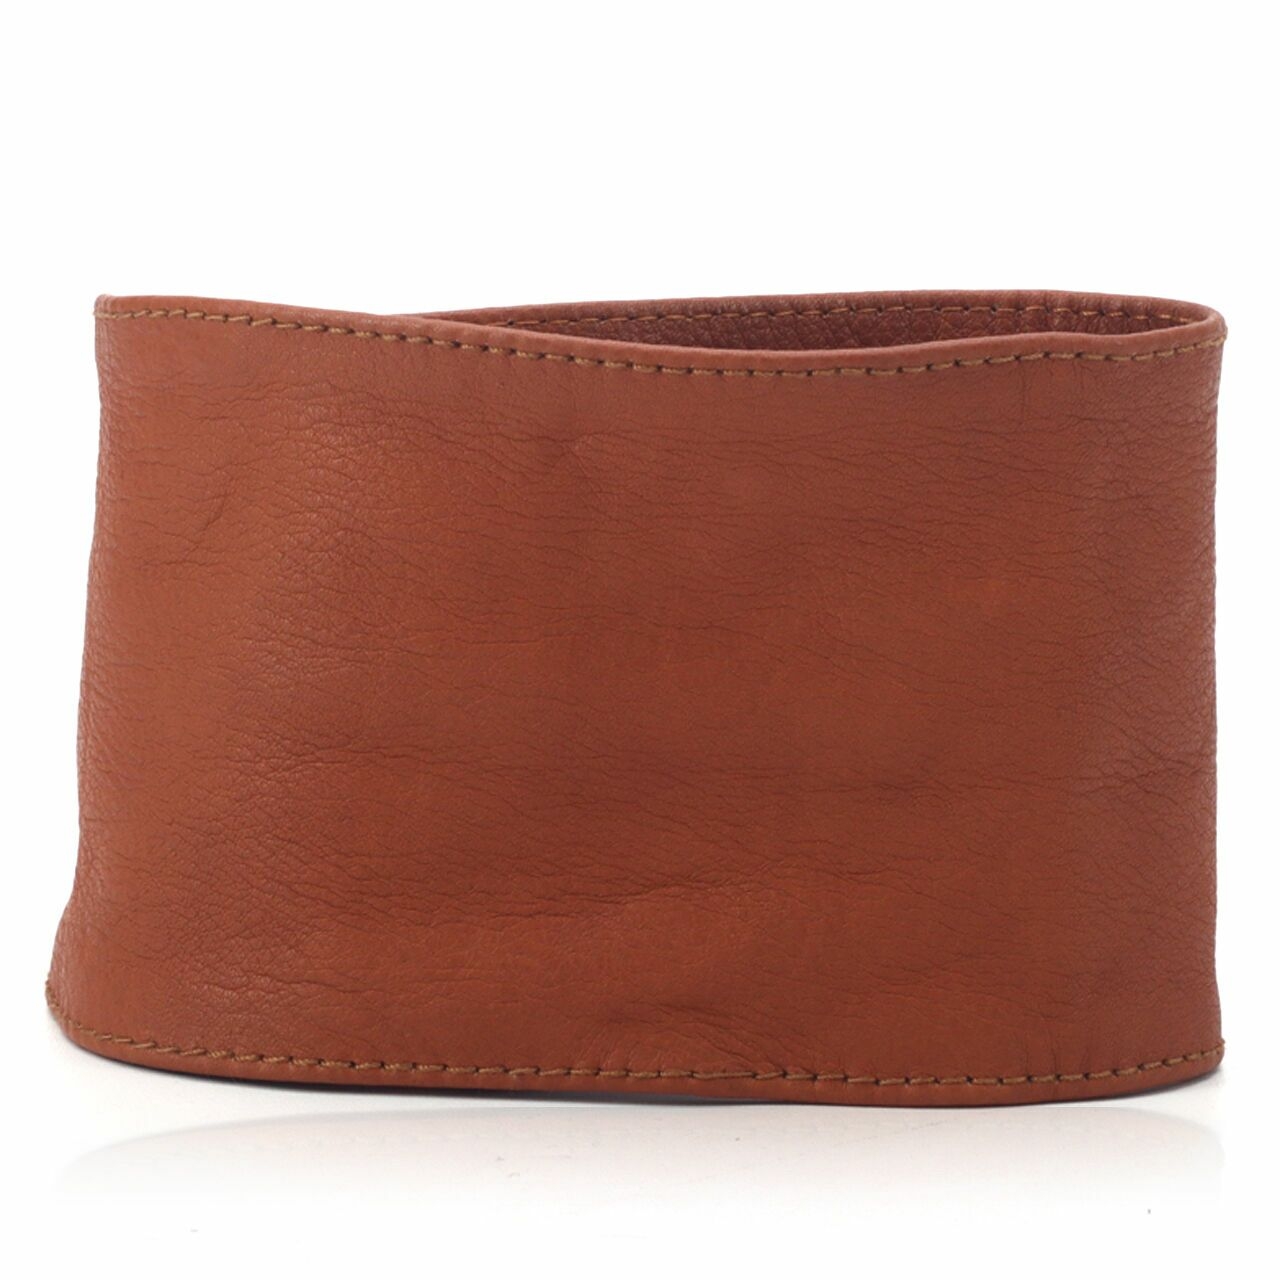 Massimo Dutti Brown Leather Belt